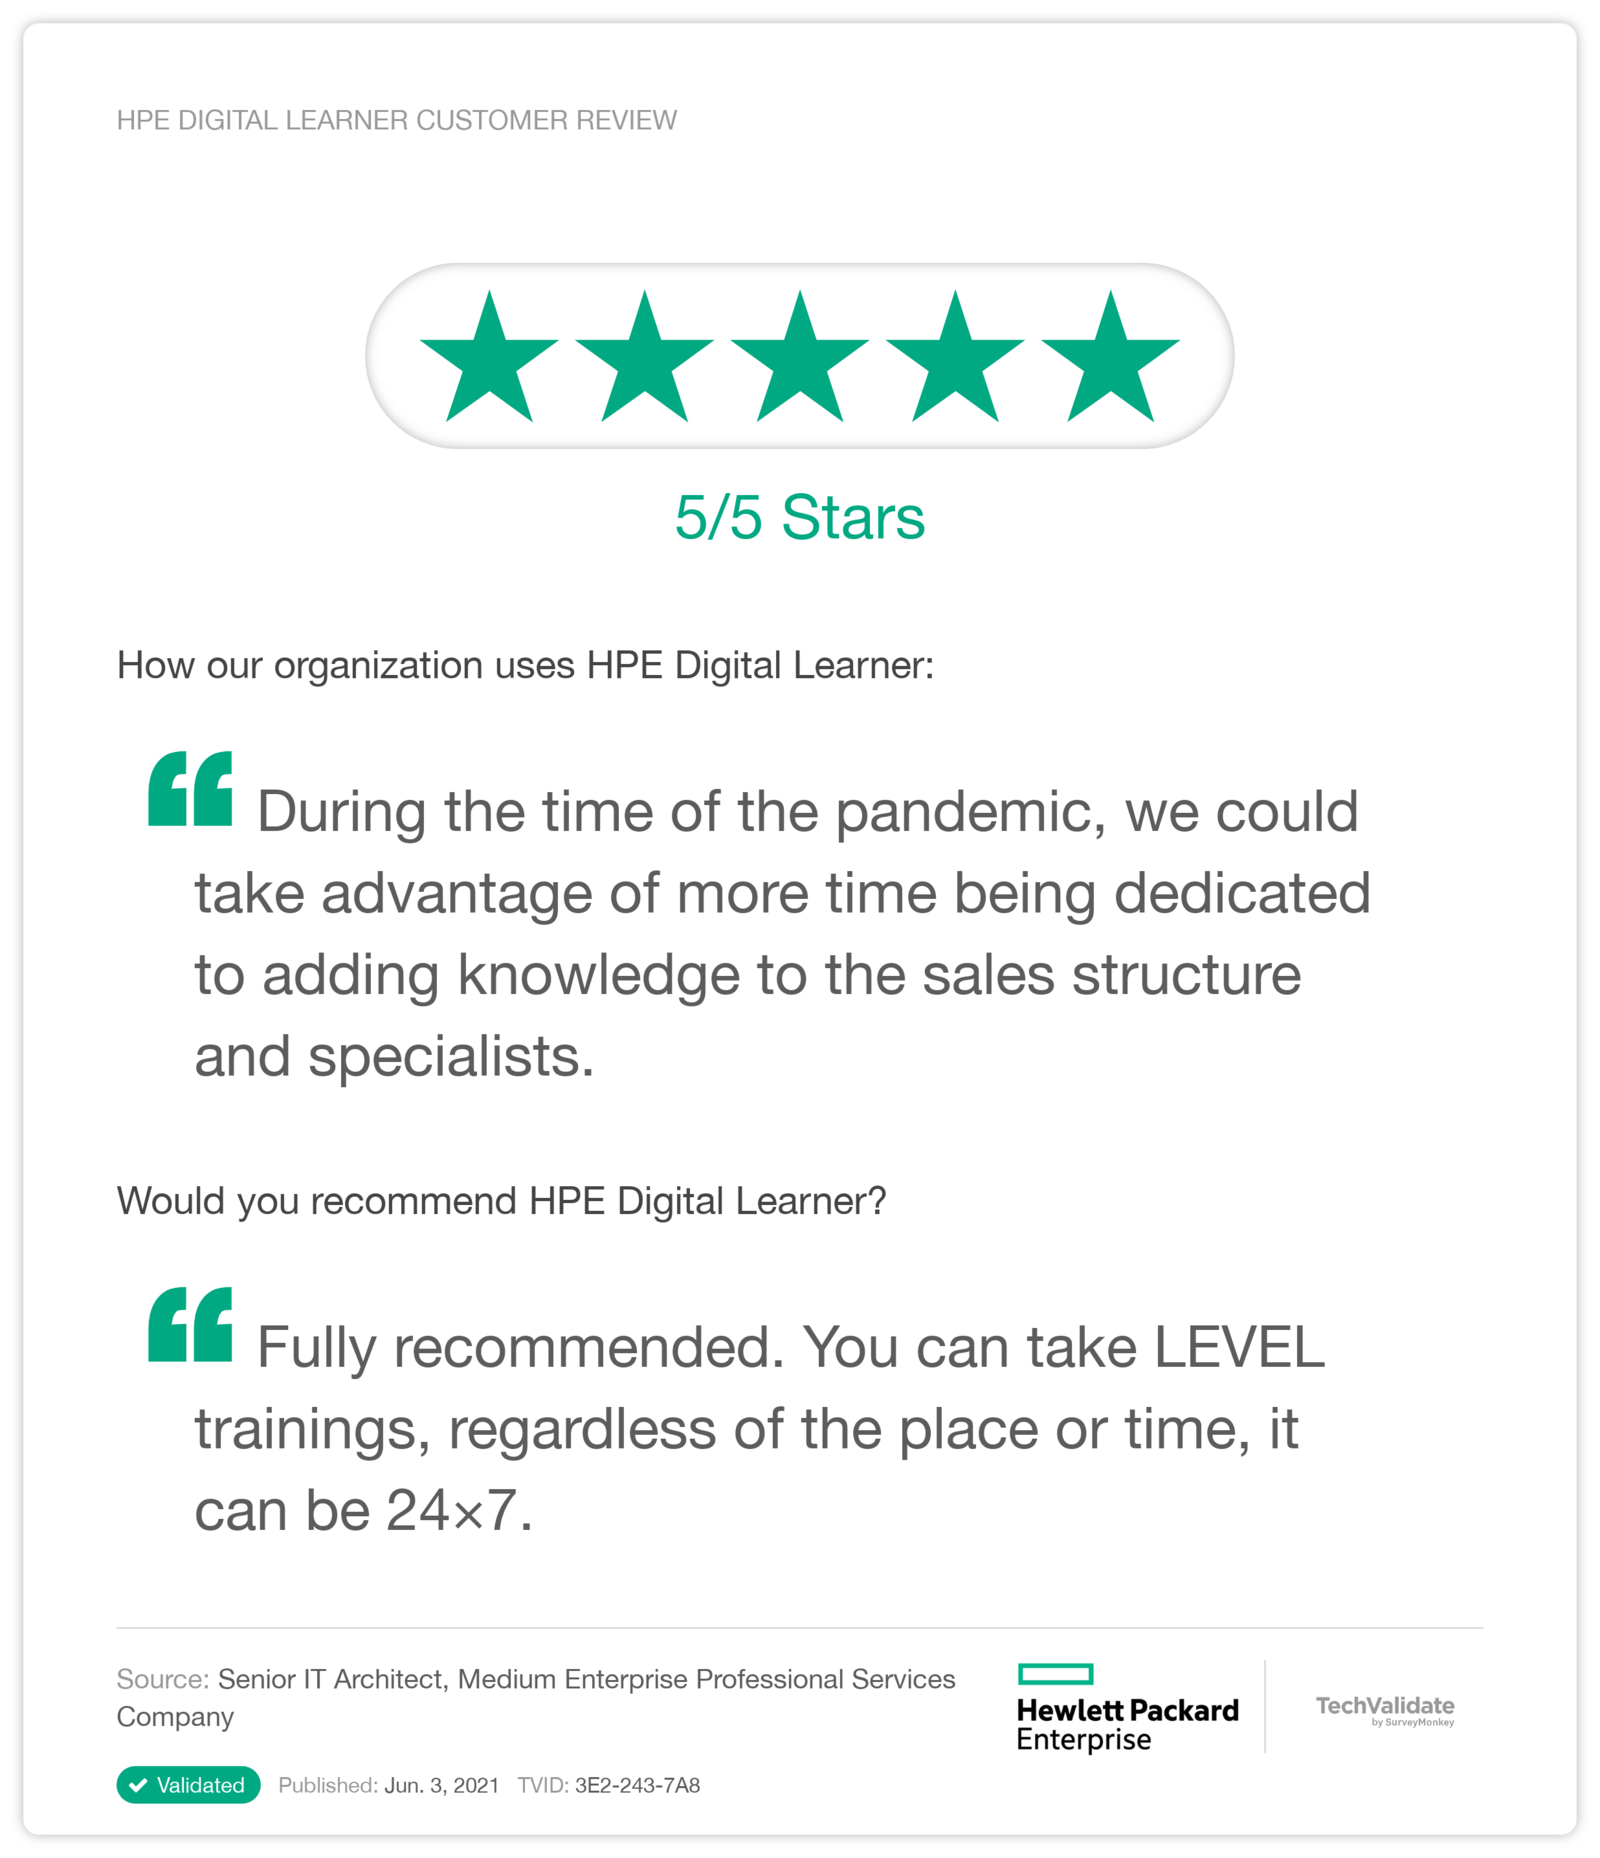 HPE Digital Learner Customer Review